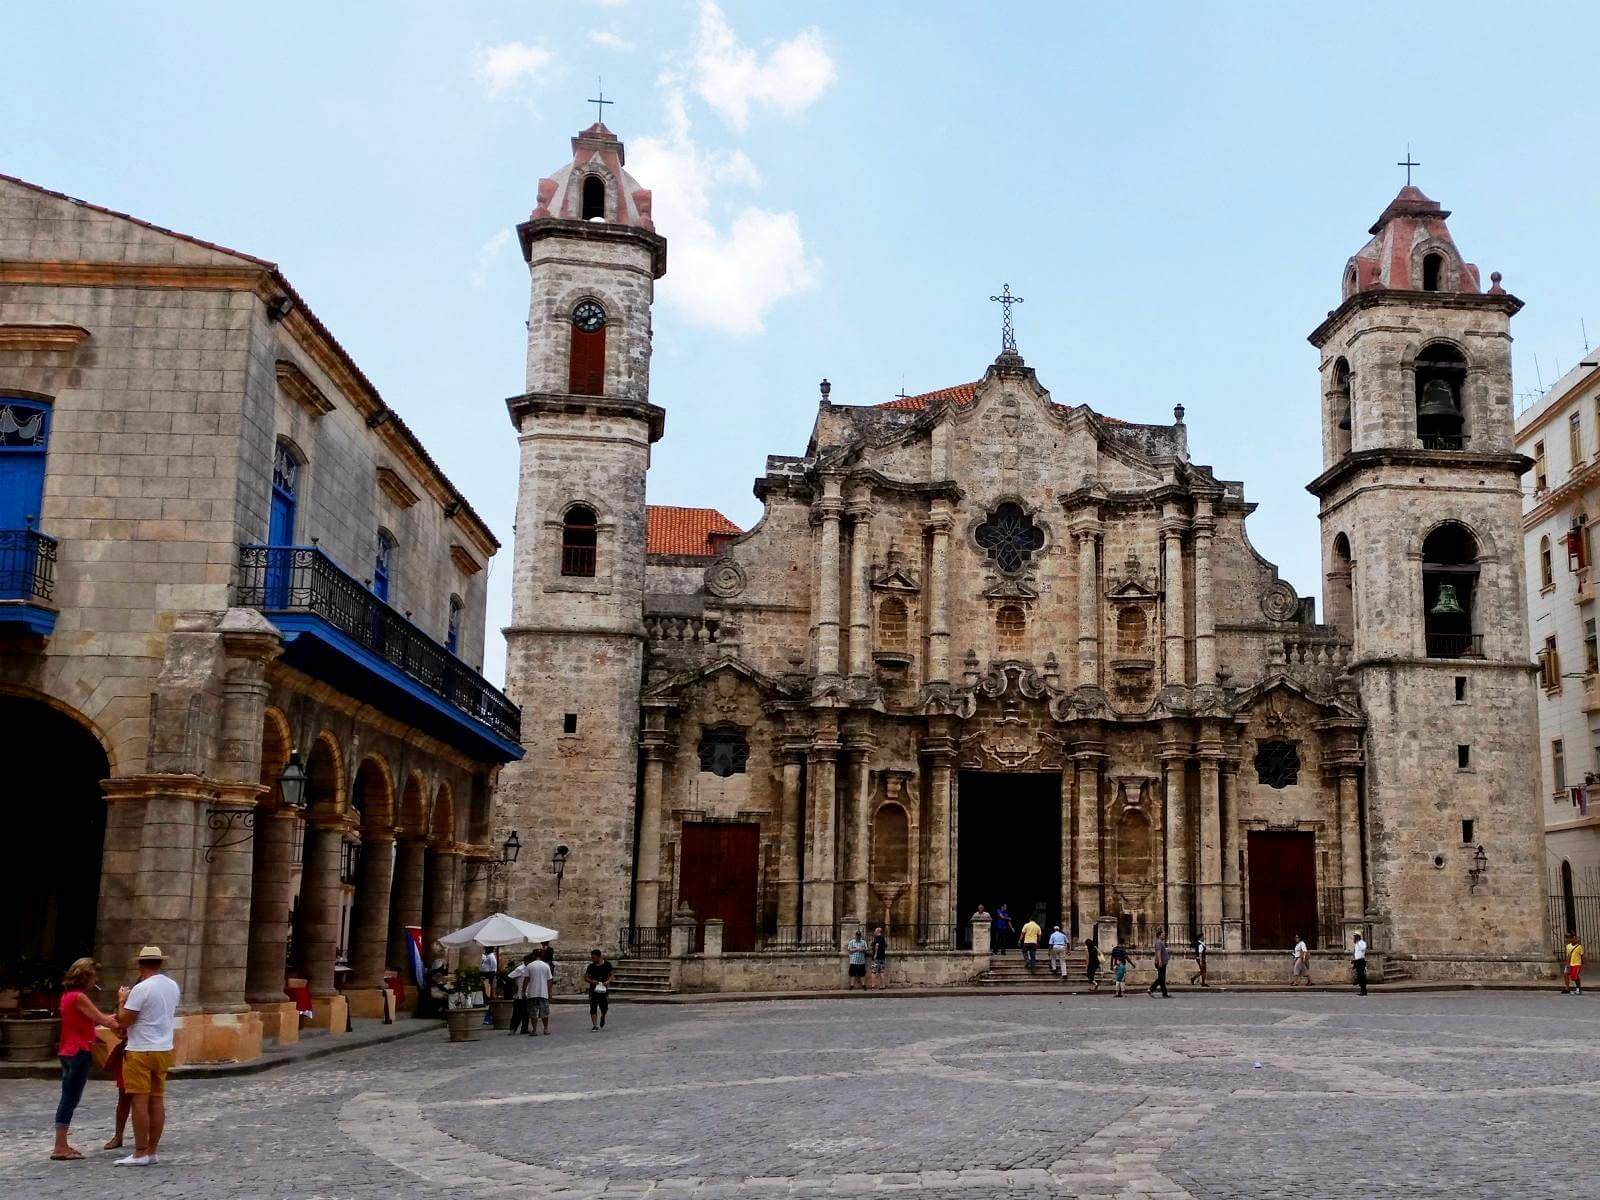 Foto: Die Plaza de la Catedral in Havanna - Lupe Reisen